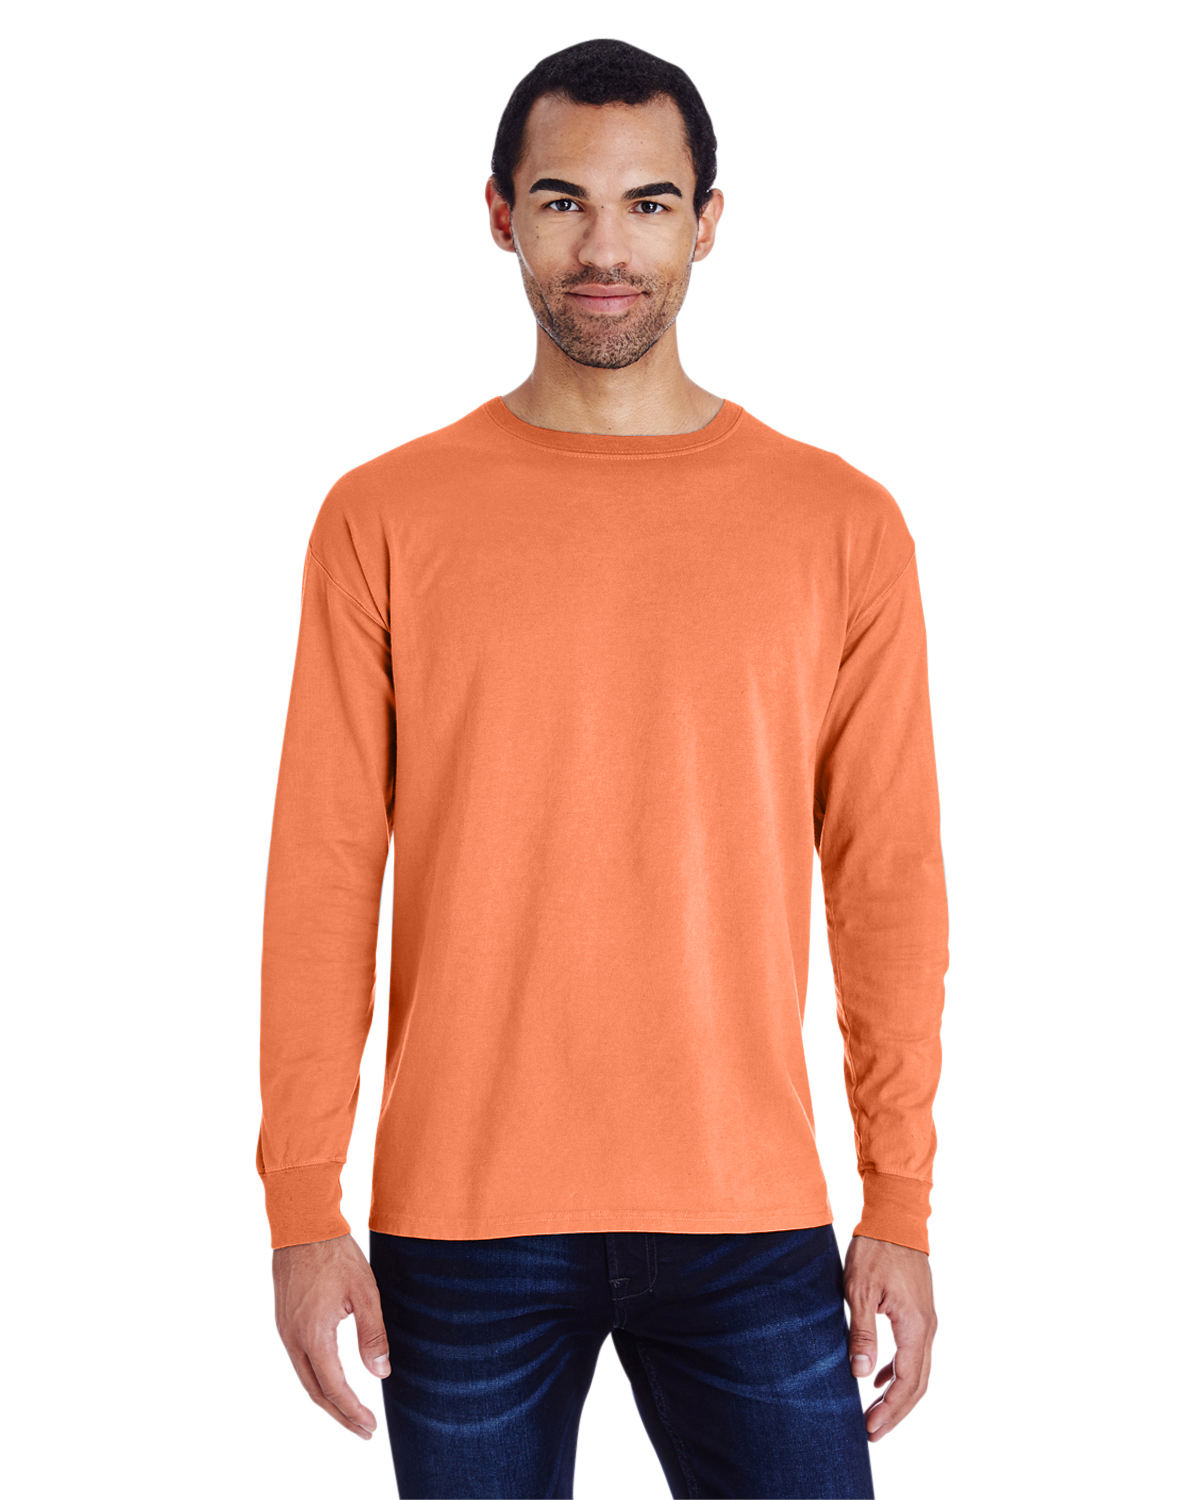 Hanes XL Steel Blue Orange Vinyl Lettering T-shirt Handmade 100% Cotton